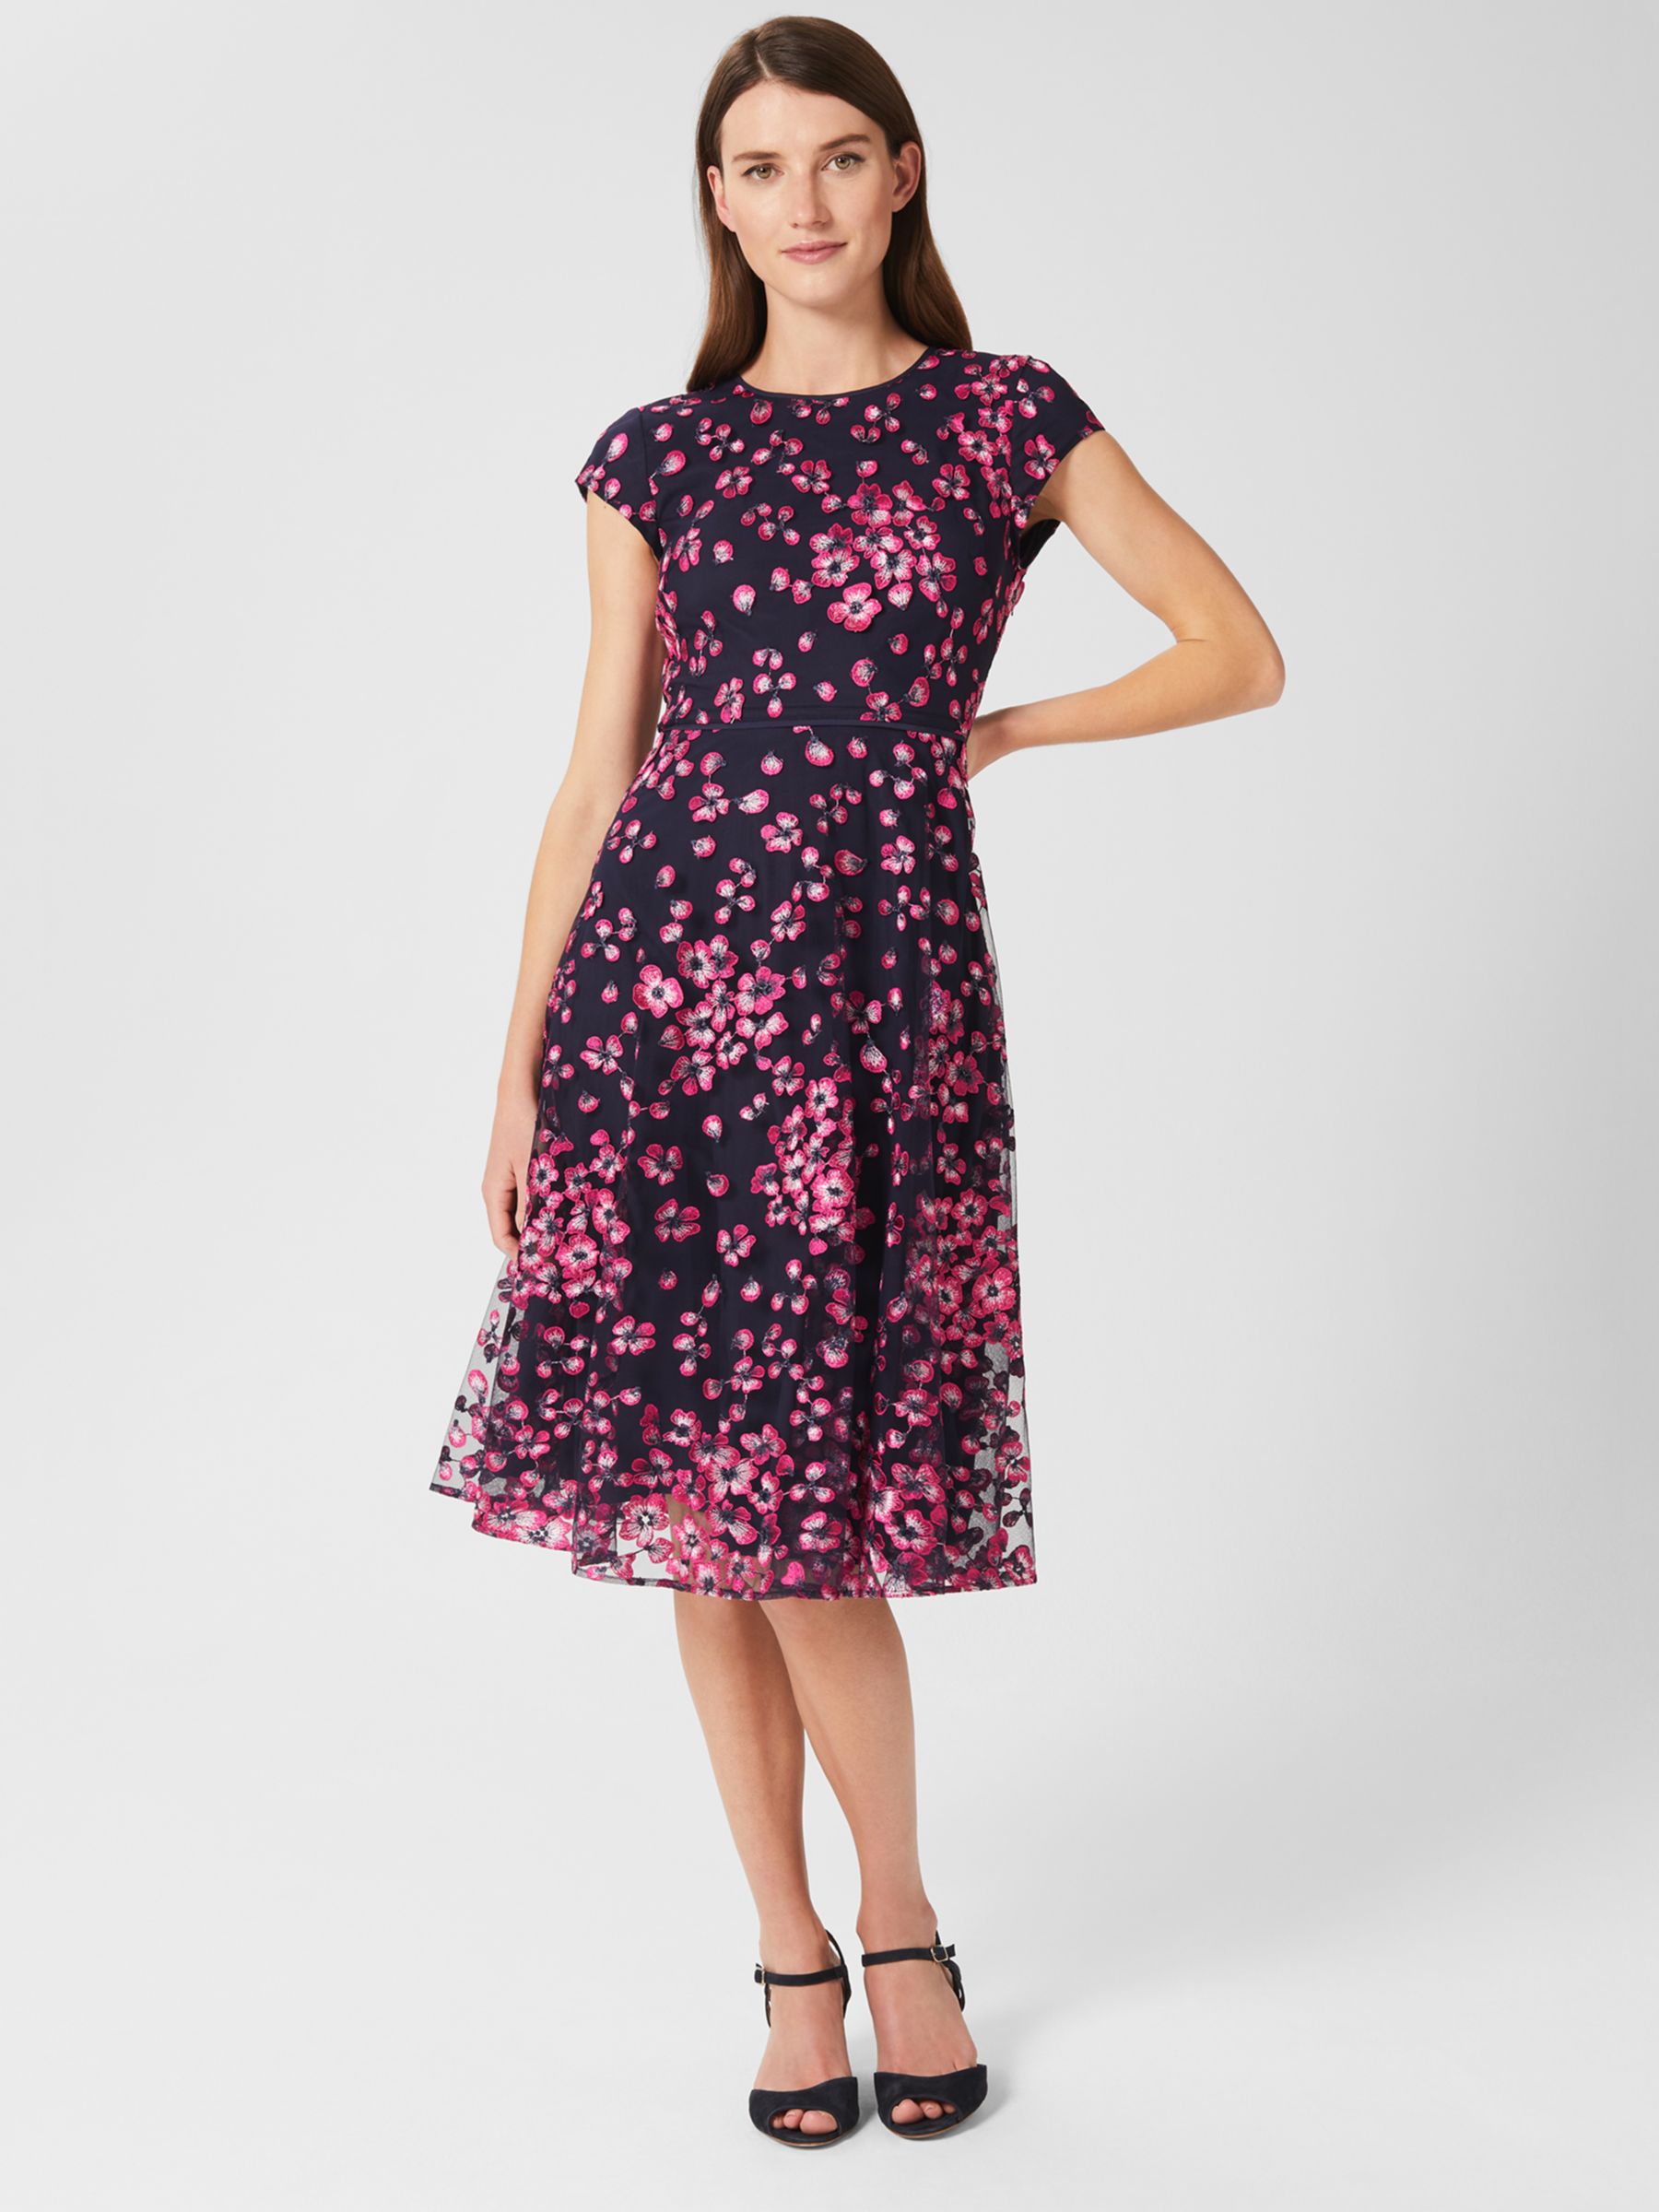 Hobbs Tia Embroidered Dress, Navy/Pink, 6